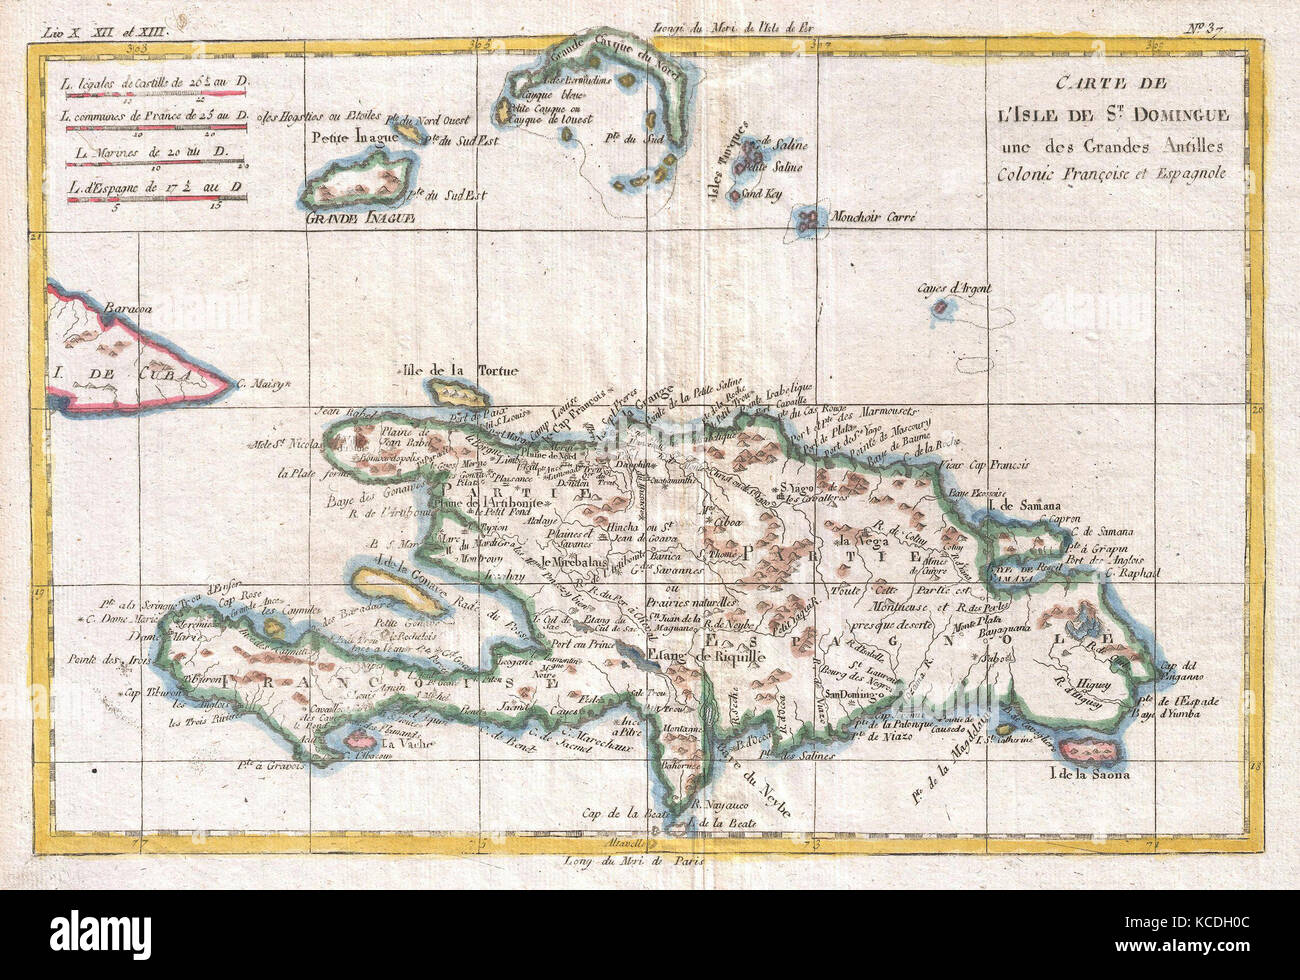 https://c8.alamy.com/comp/KCDH0C/1780-raynal-and-bonne-map-of-hispaniola-west-indies-rigobert-bonne-KCDH0C.jpg